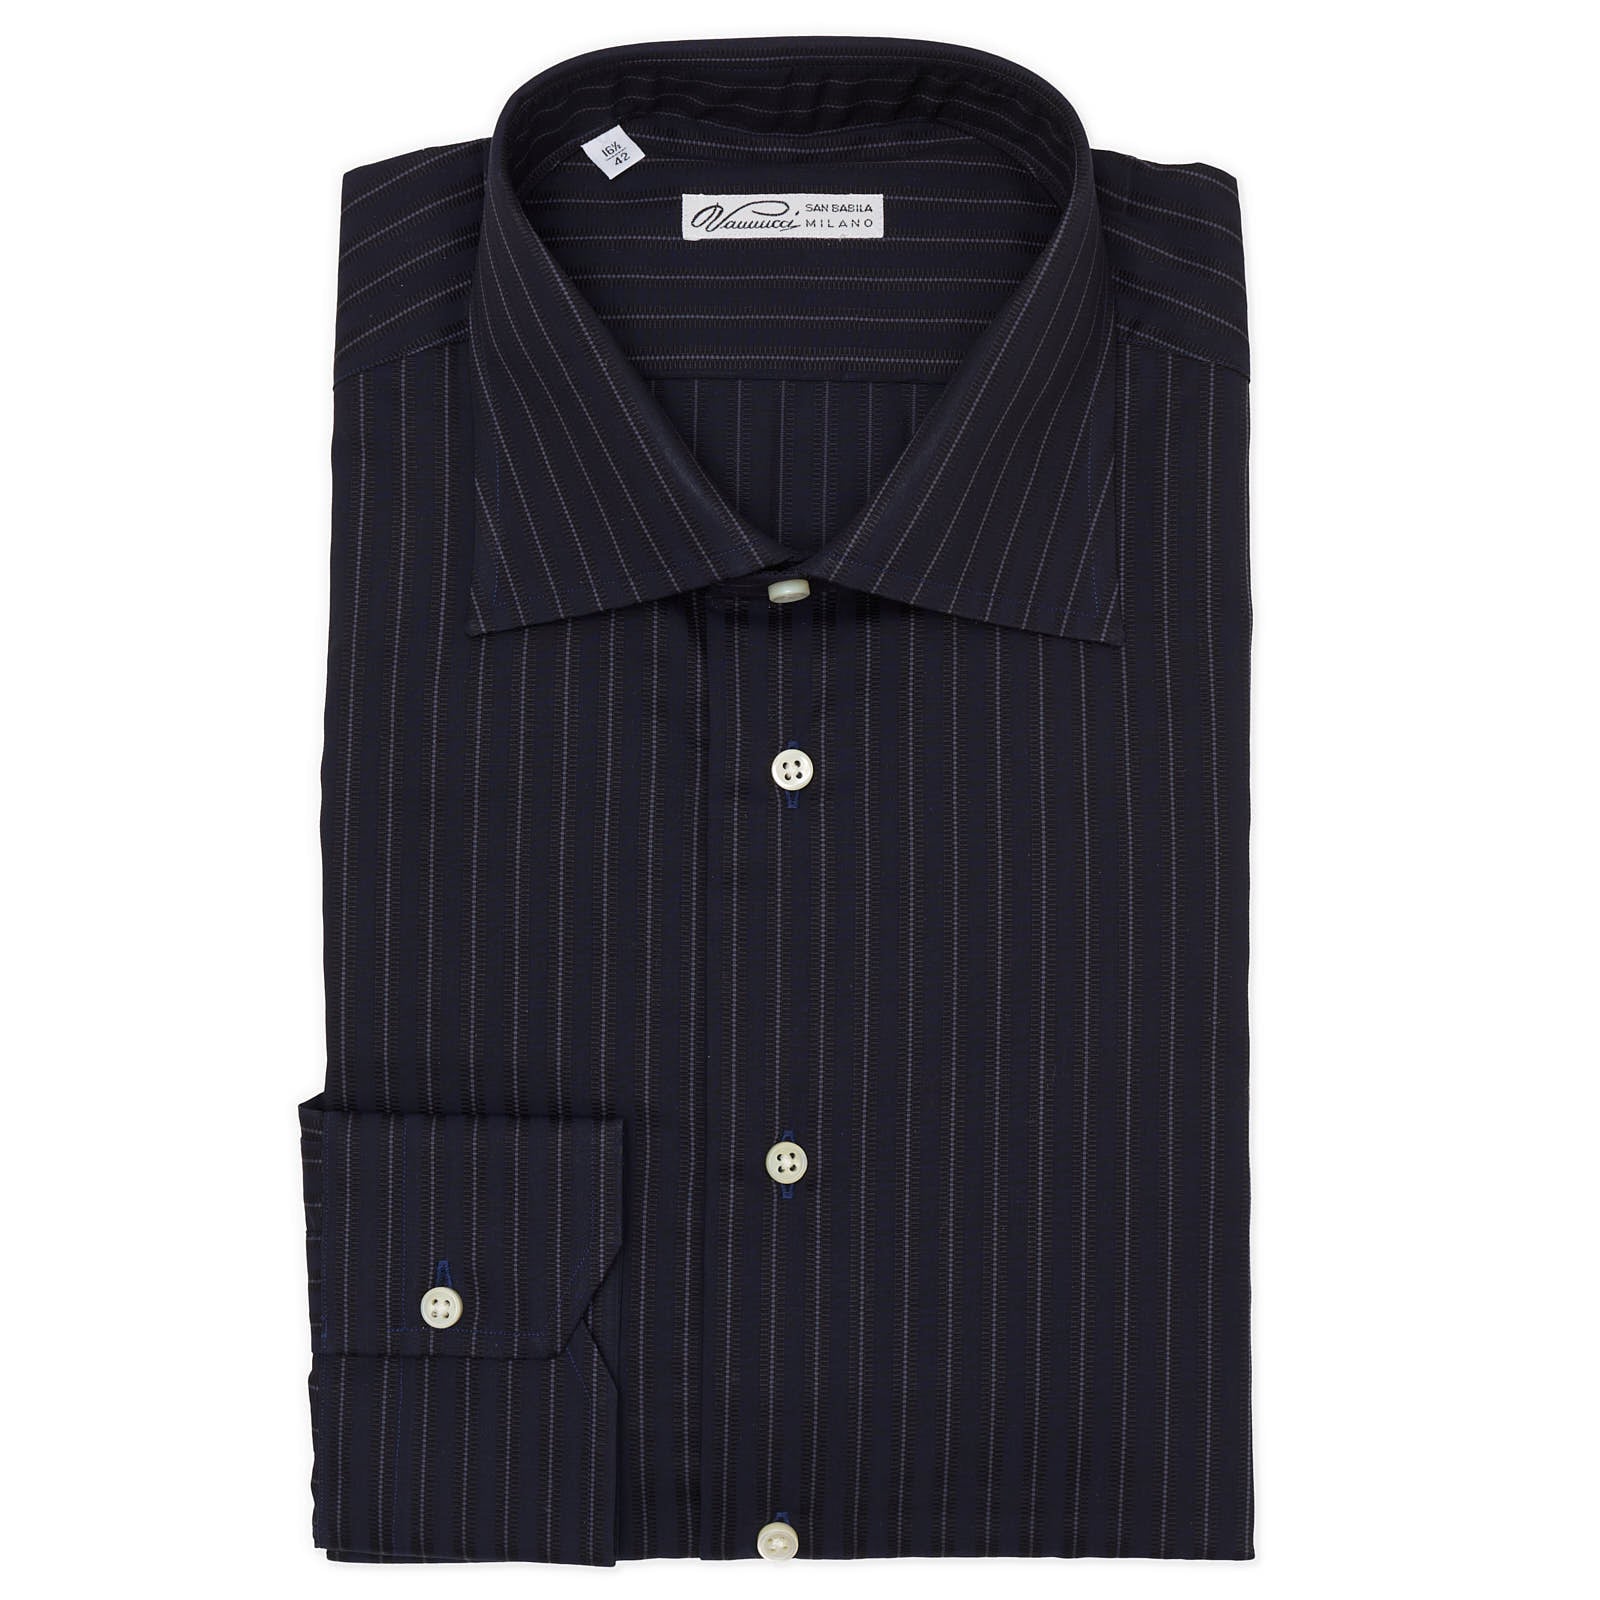 VANNUCCI Milano Navy Blue Striped Cotton Dress Shirt NEW 16.5